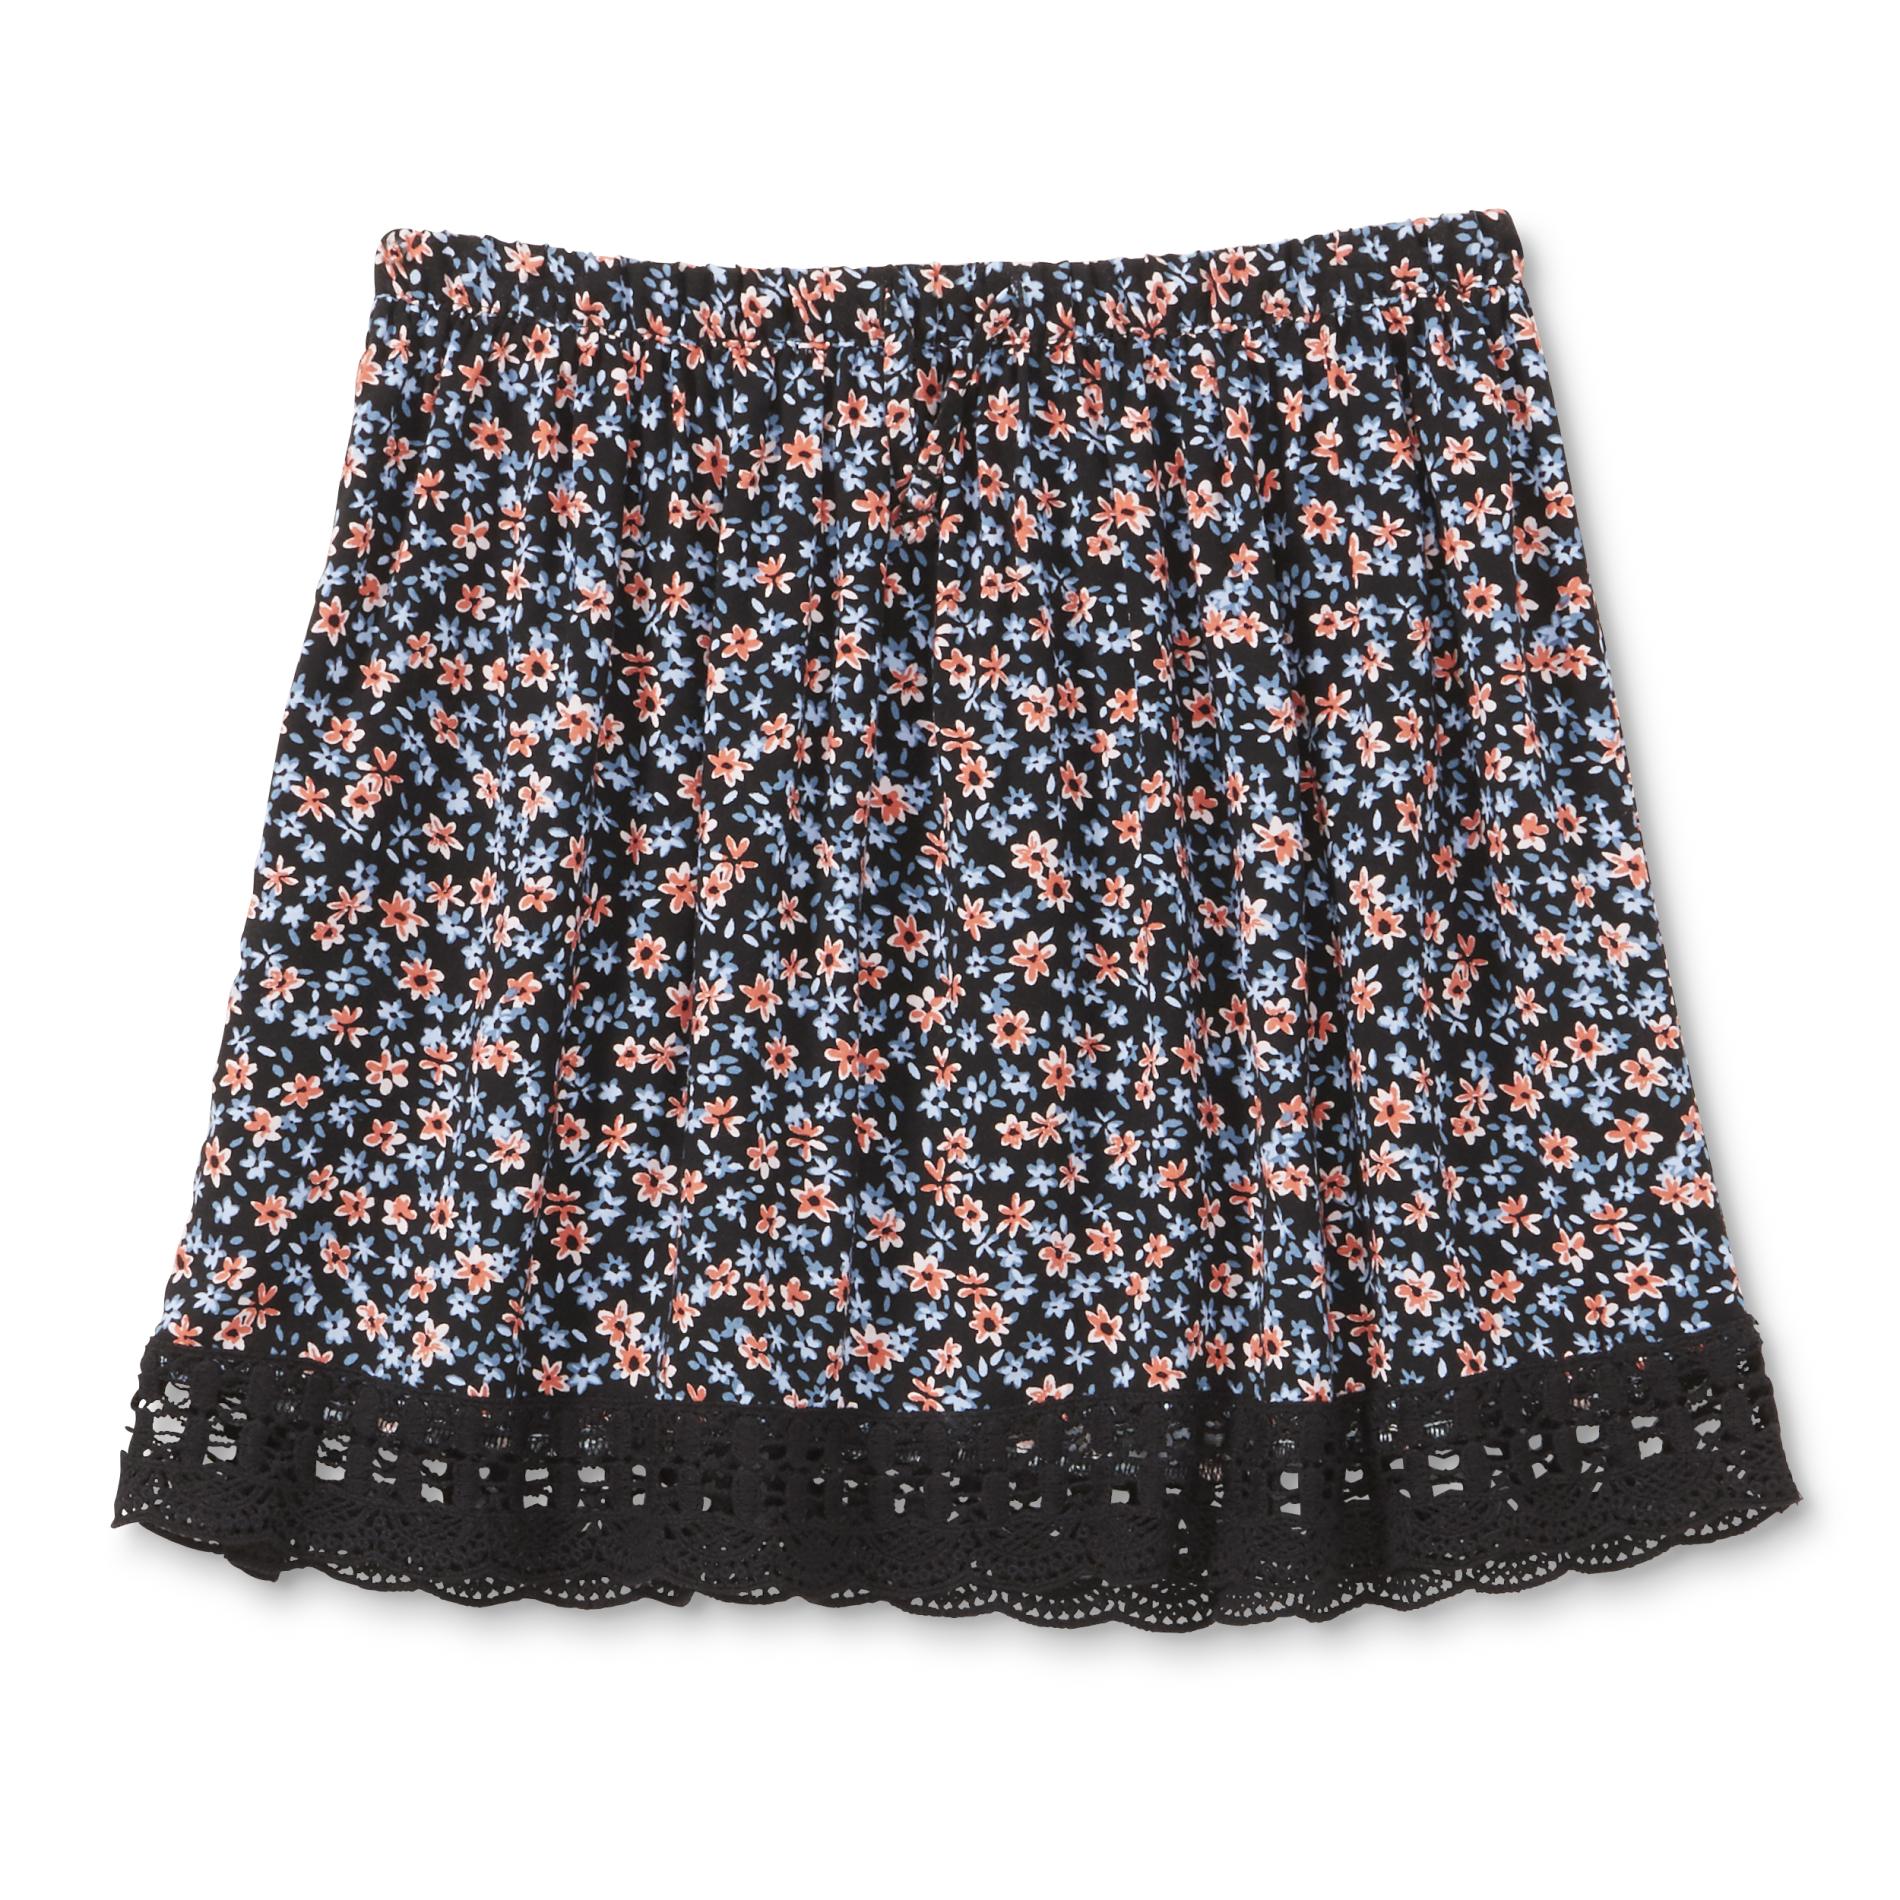 Simply Styled Girls' Embellished Skater Skirt - Floral